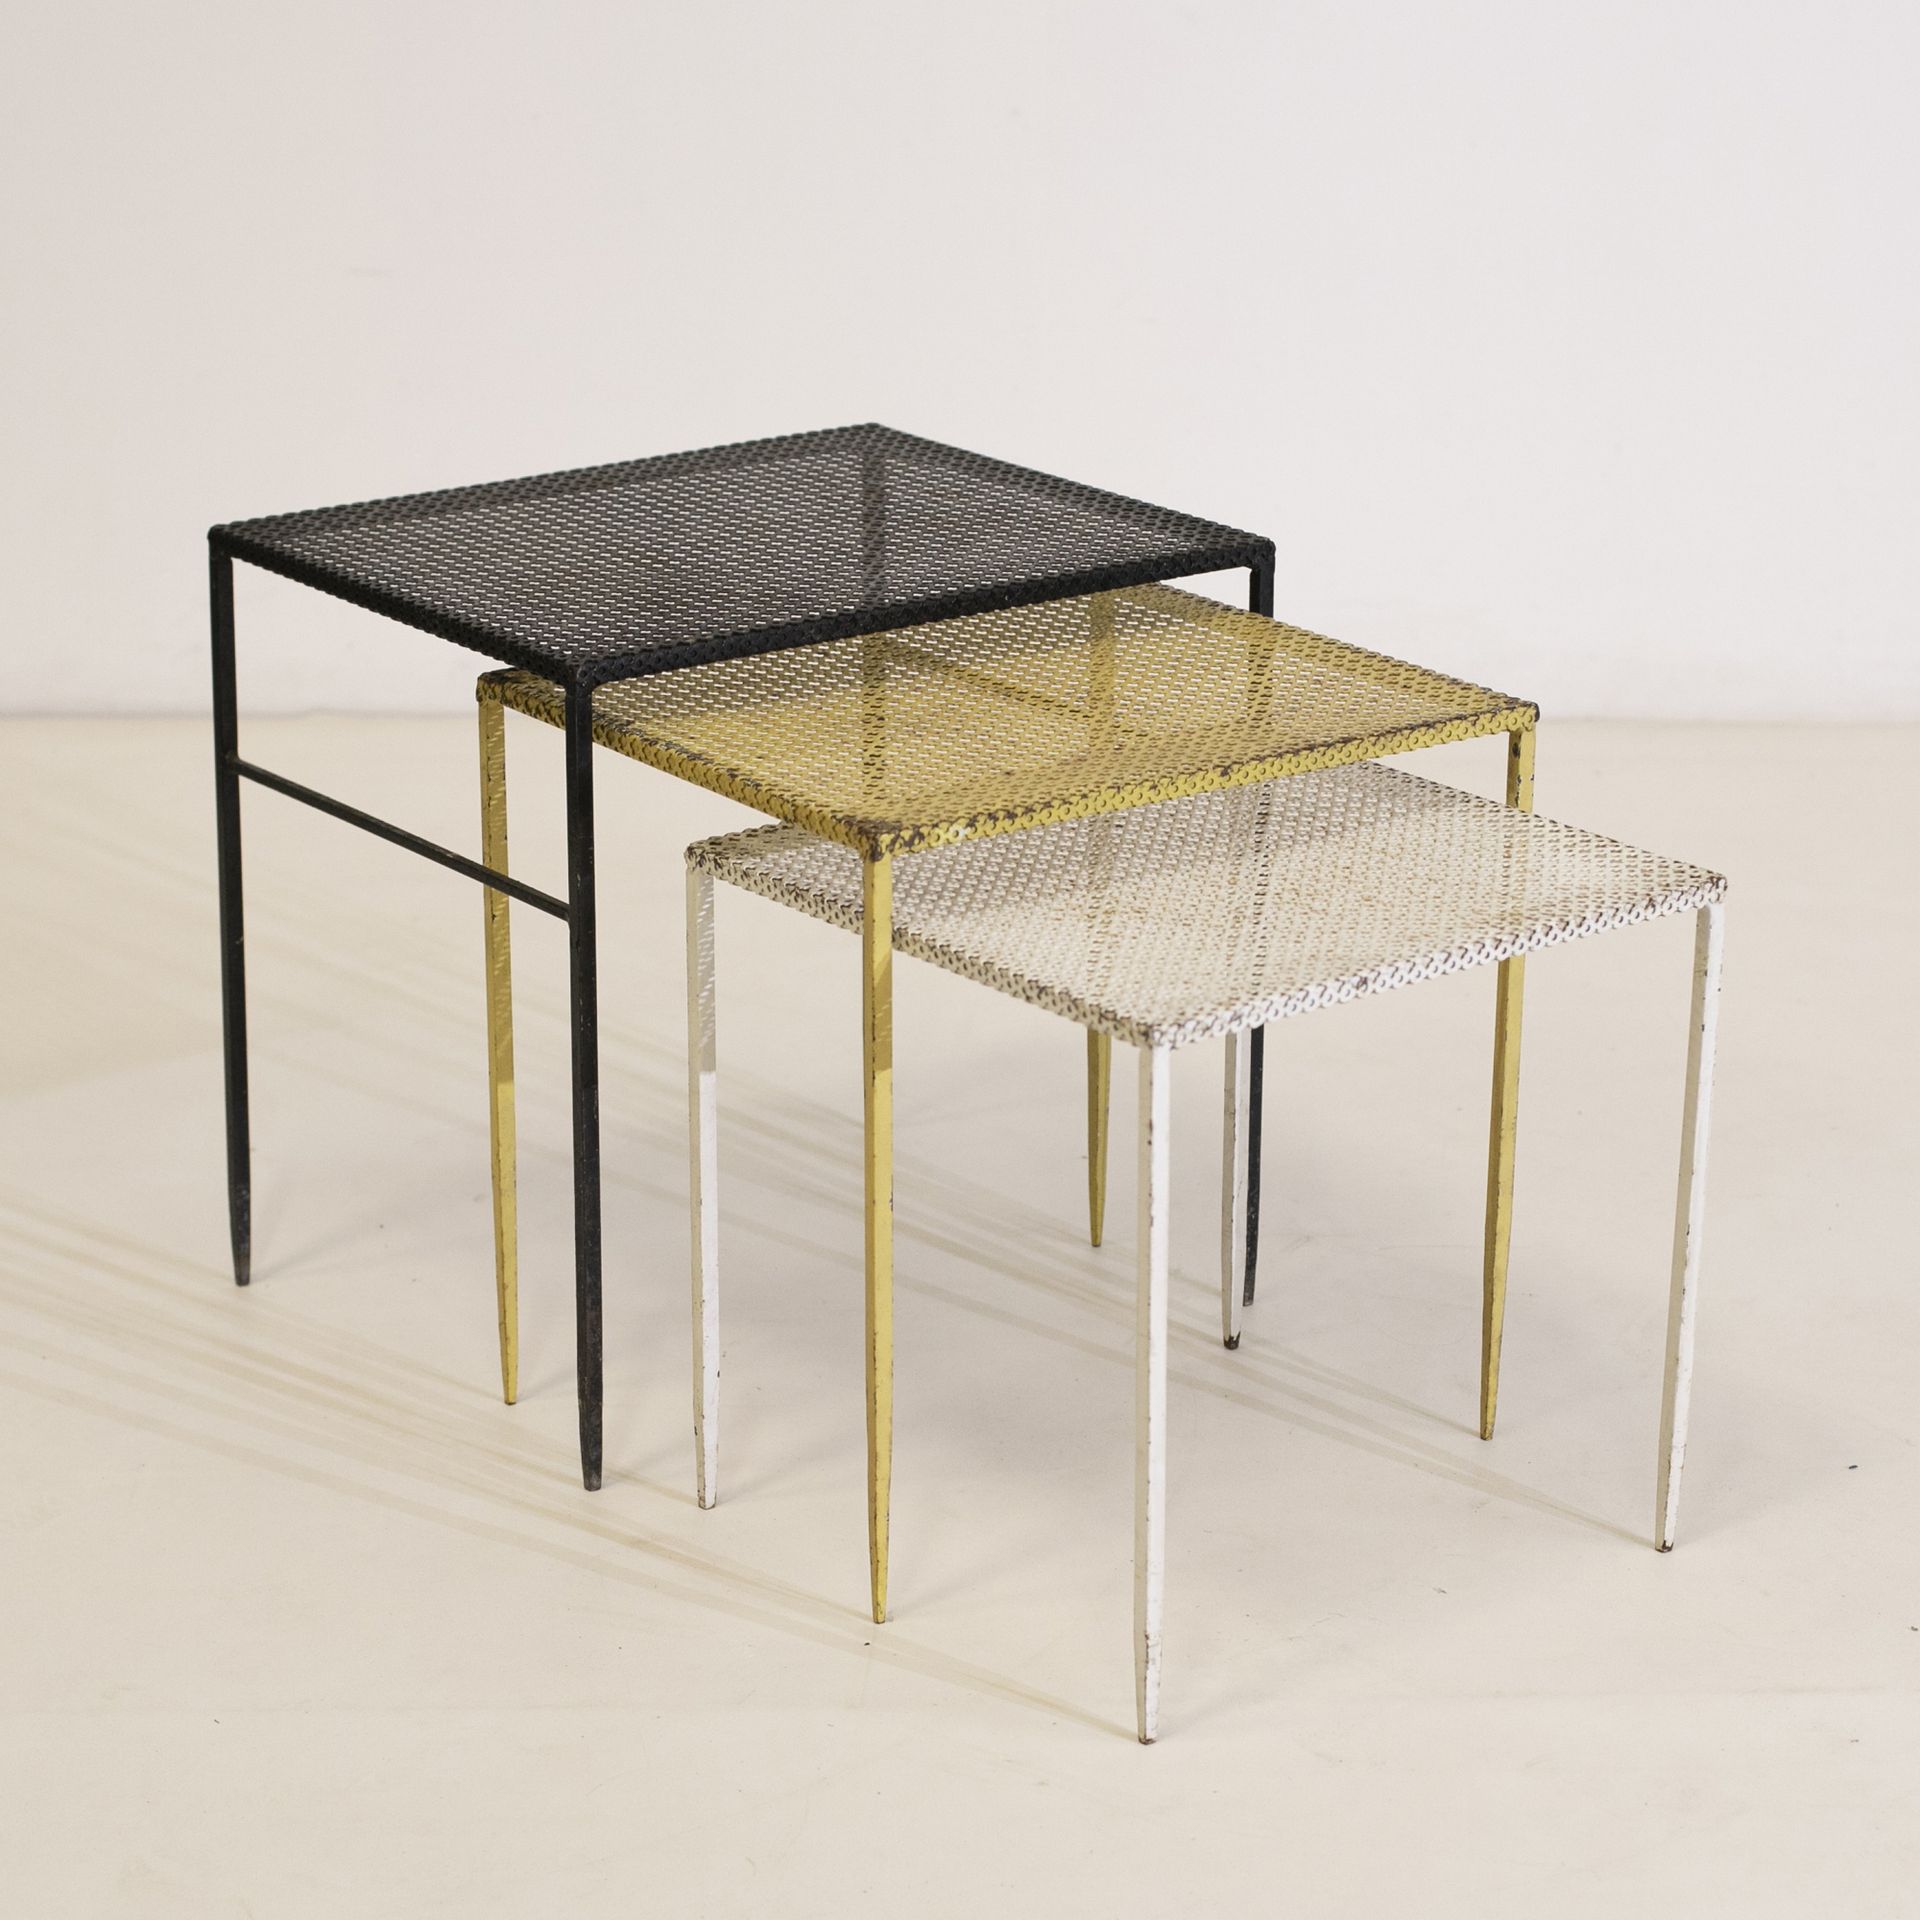 Mathieu MATÉGOT (1910-2001) 一套三张的嵌套桌 

三色金属和穿孔金属

约1950年

大号：高_52厘米，宽_53.5厘米，长_4&hellip;